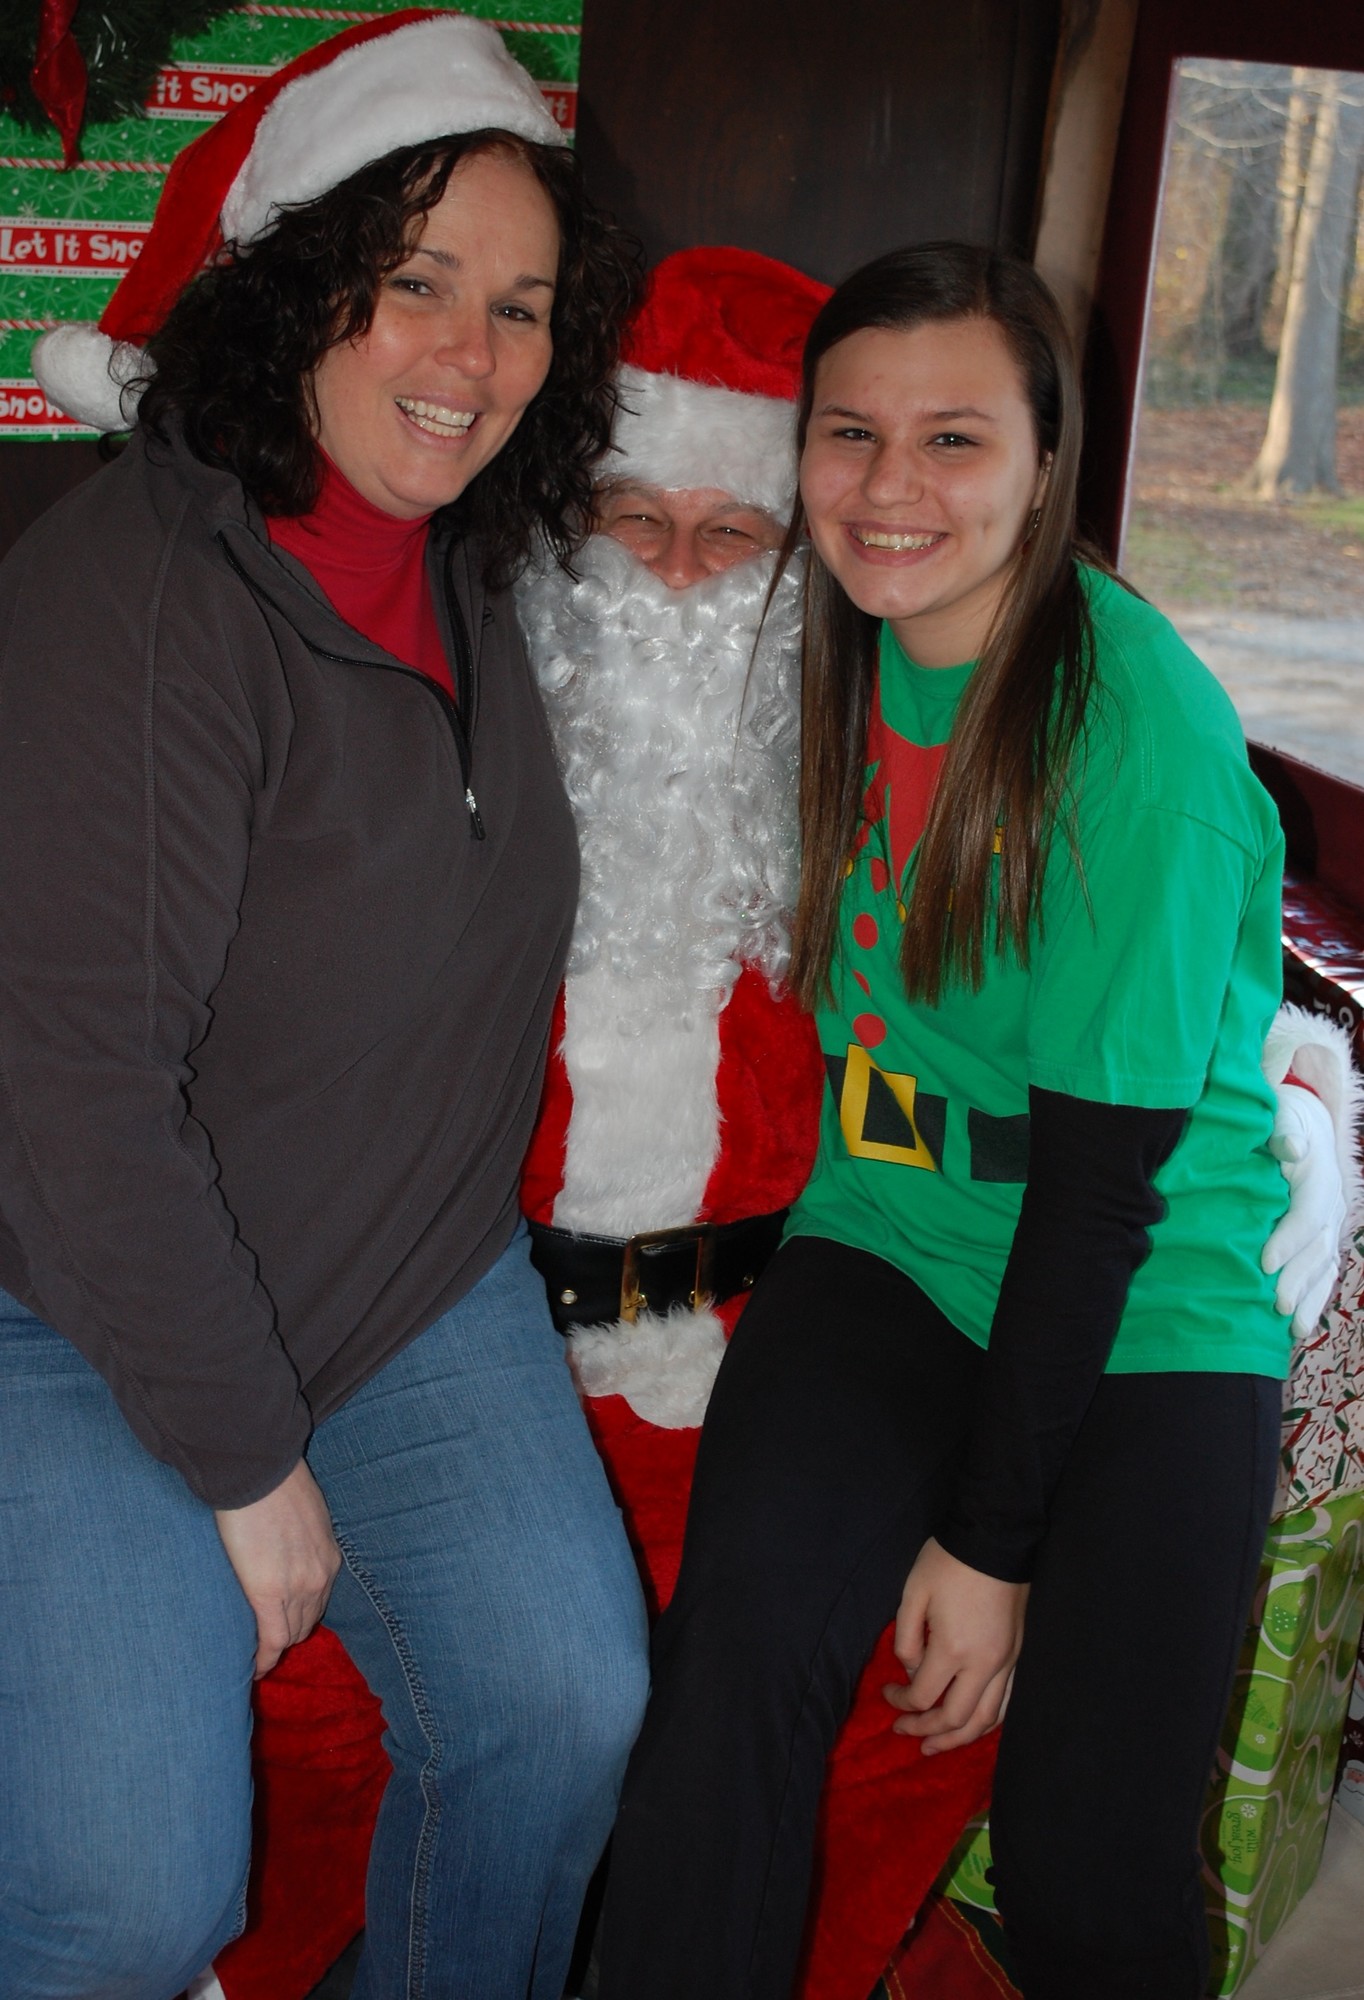 Karen and Gillian Chowske with Santa.